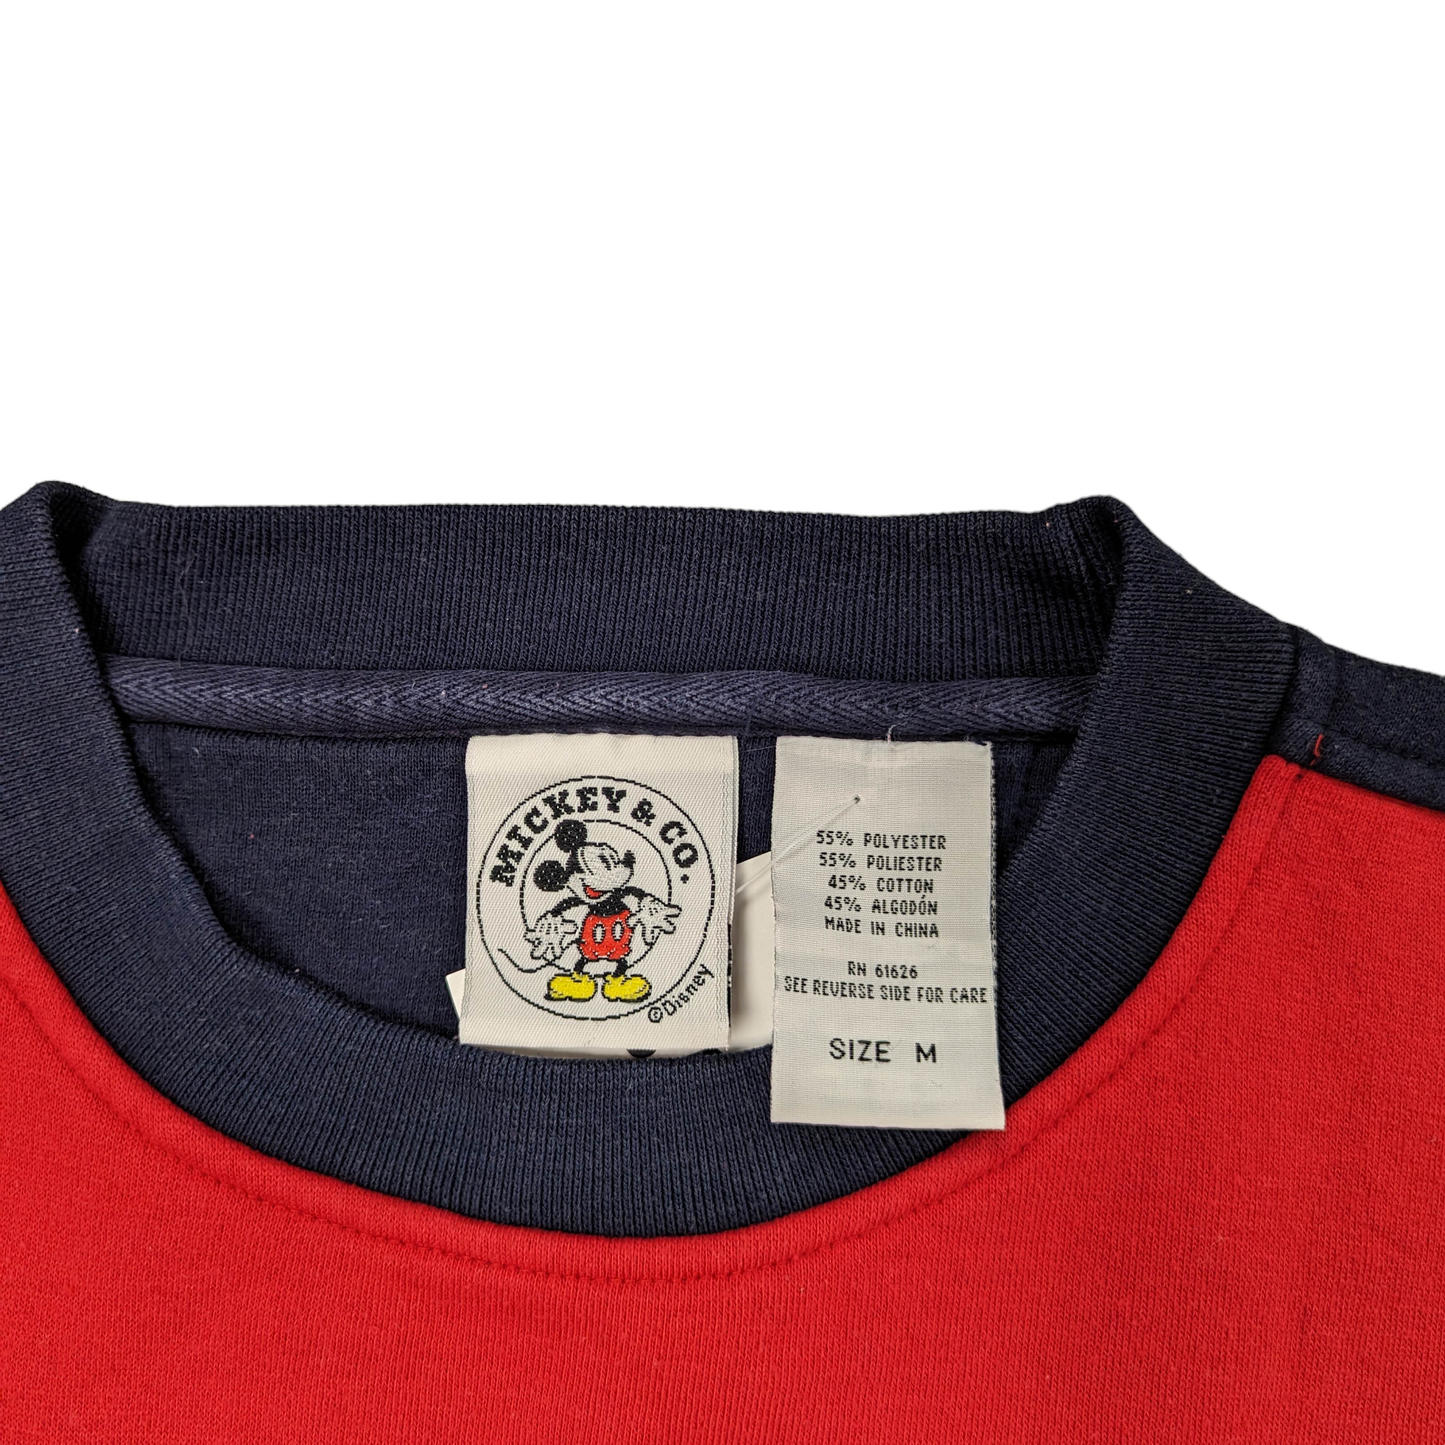 Mickey & Co Sweatshirt Size M